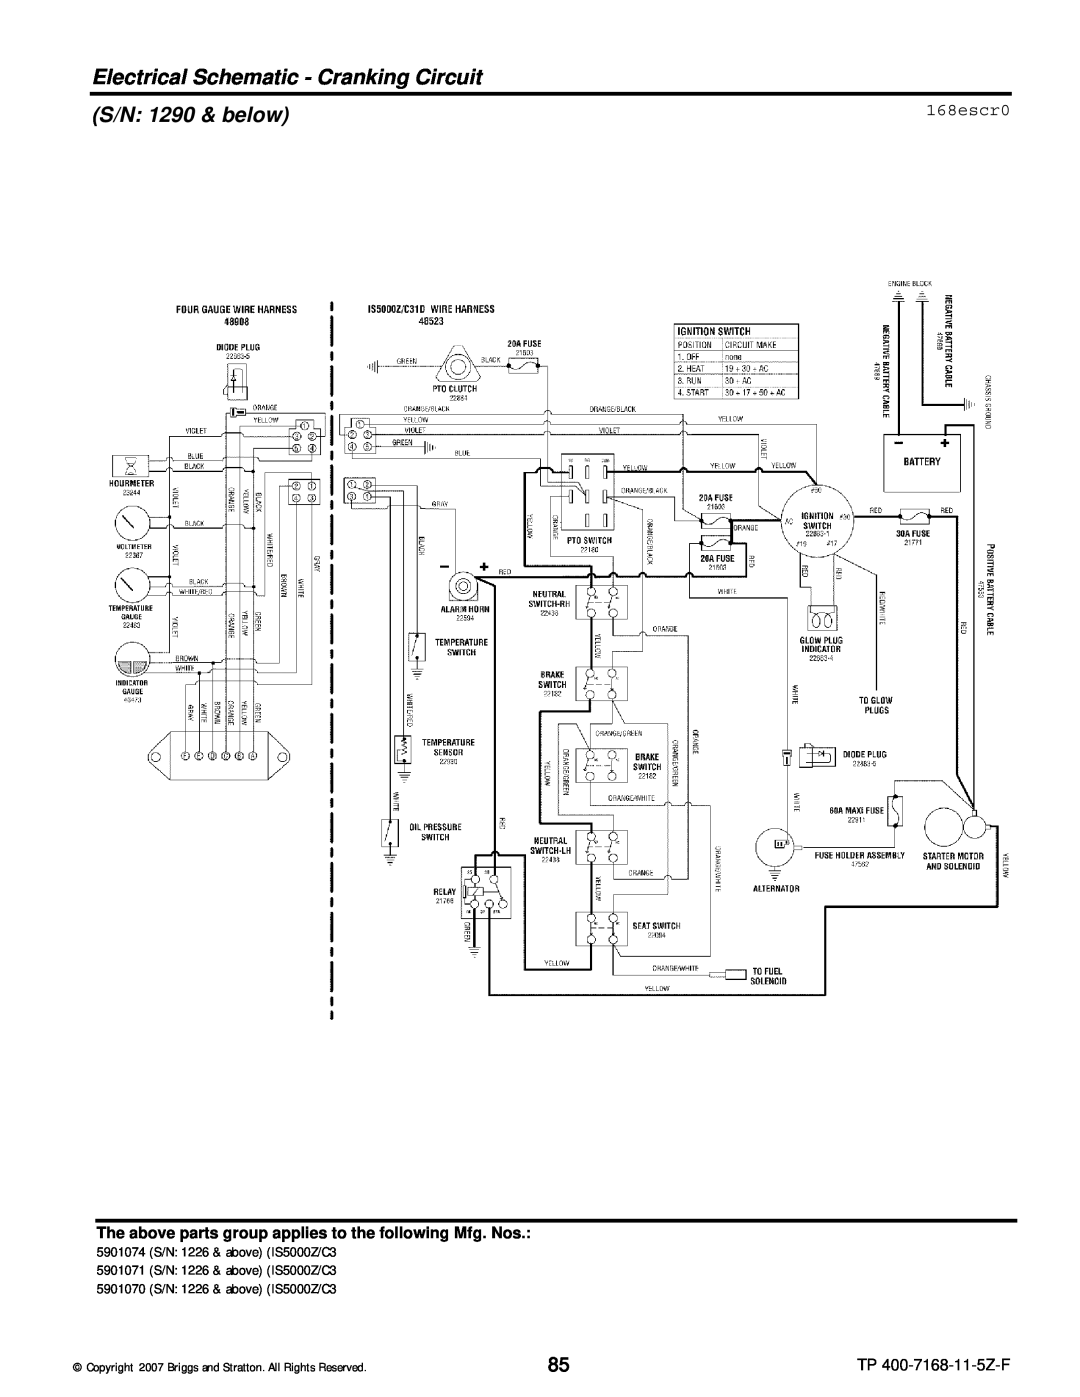 Briggs & Stratton 5900203 manual Electrical Schematic - Cranking Circuit, 168escr0, S/N 1290 & below, TP 400-7168-11-5Z-F 